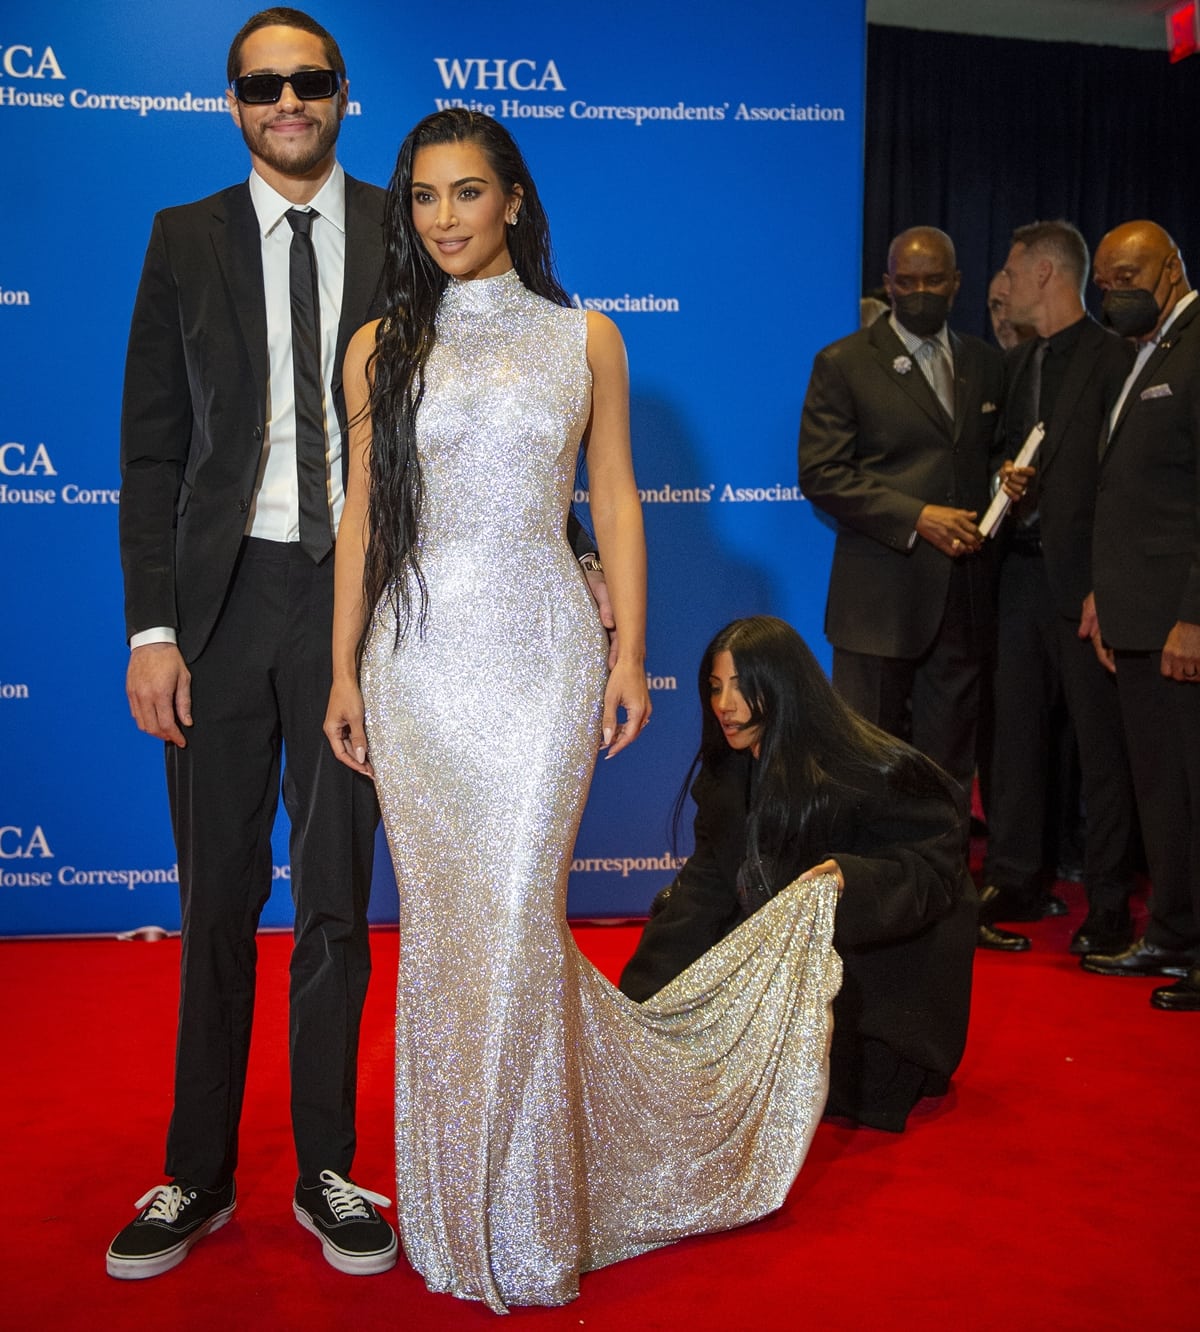 Kim Kardashian and Pete Davidson made their red carpet debut at the 2022 White House Correspondents’ Association Dinner